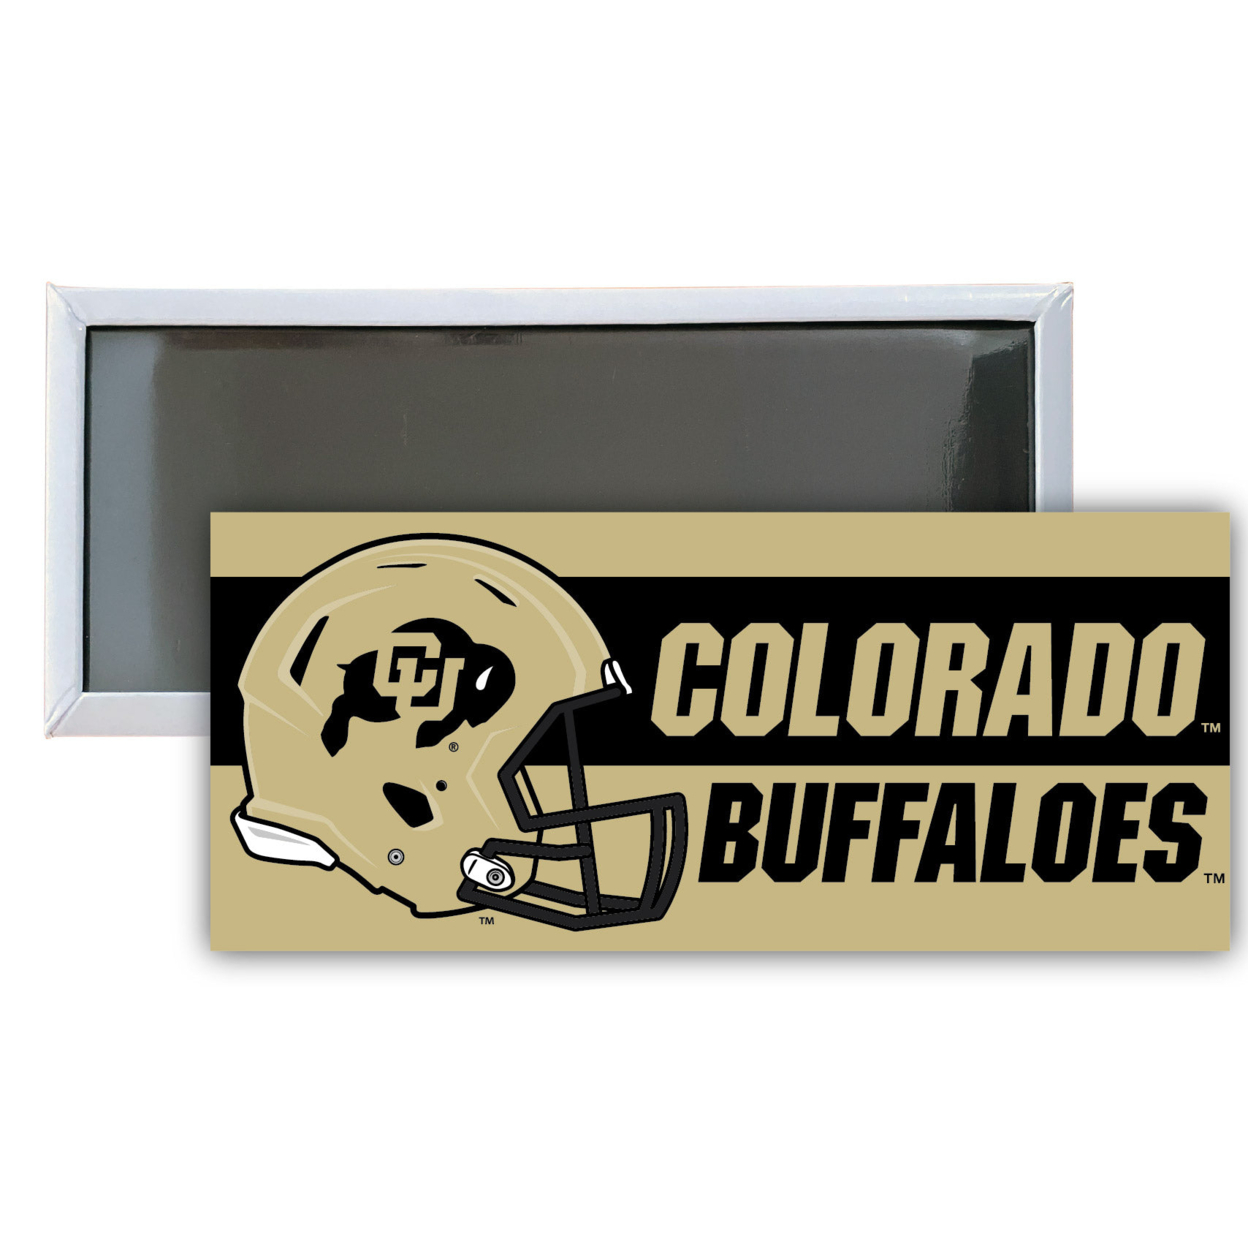 Colorado Buffaloes 4.75 X 2-Inch Fridge Magnet Rectangle